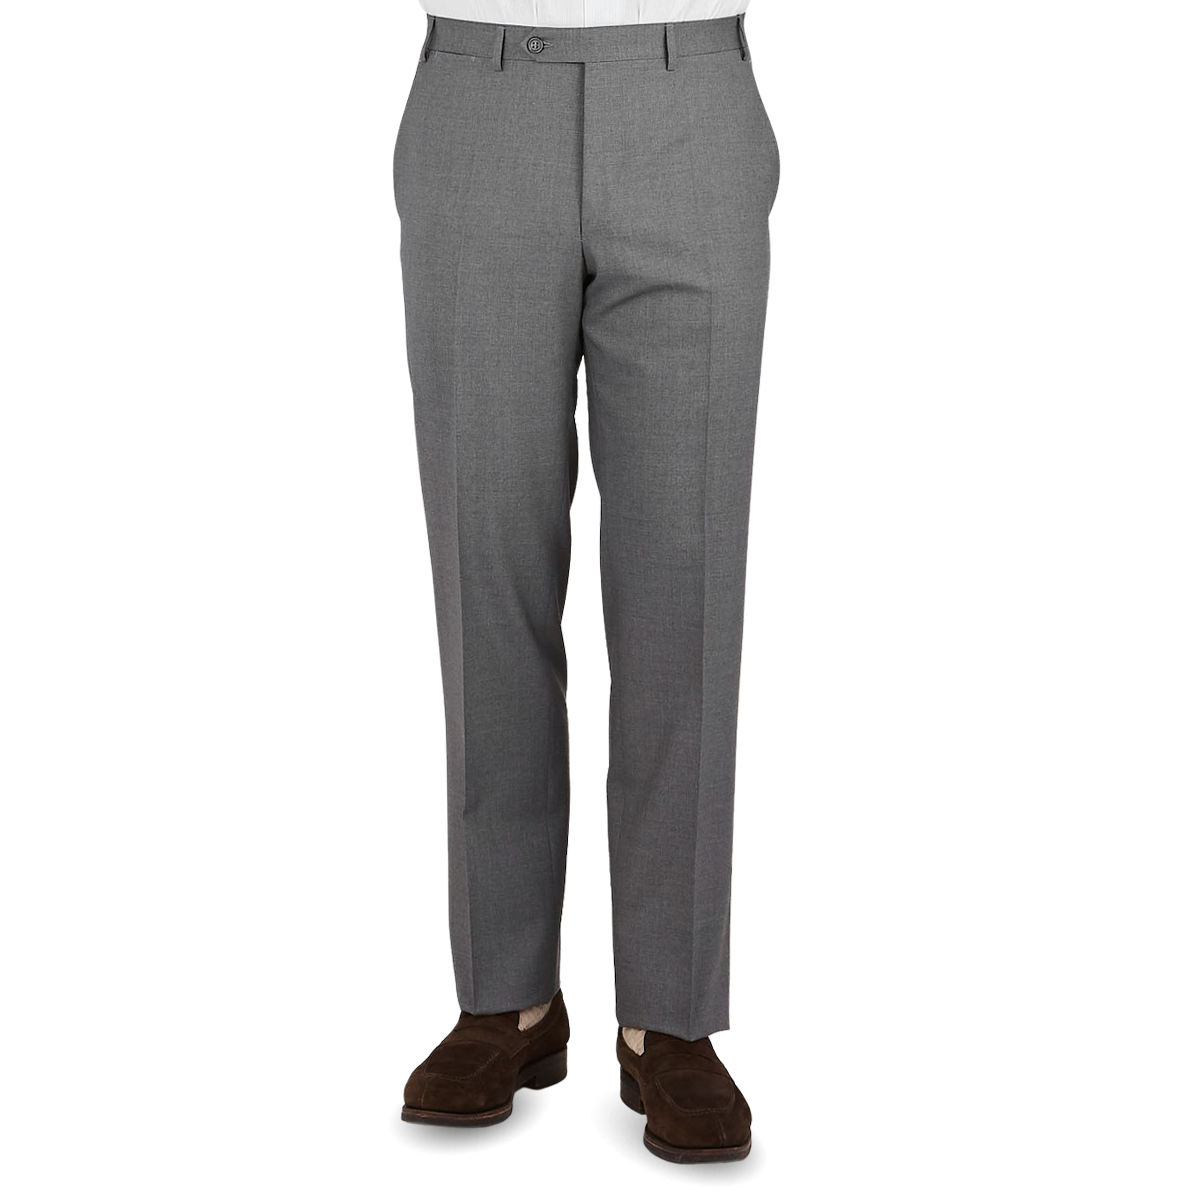 Spring Gray Sweatpants Men's Casual Pleated Solid Suit Pants Zipper Pocket  Ankle-Length Trousers - Walmart.com